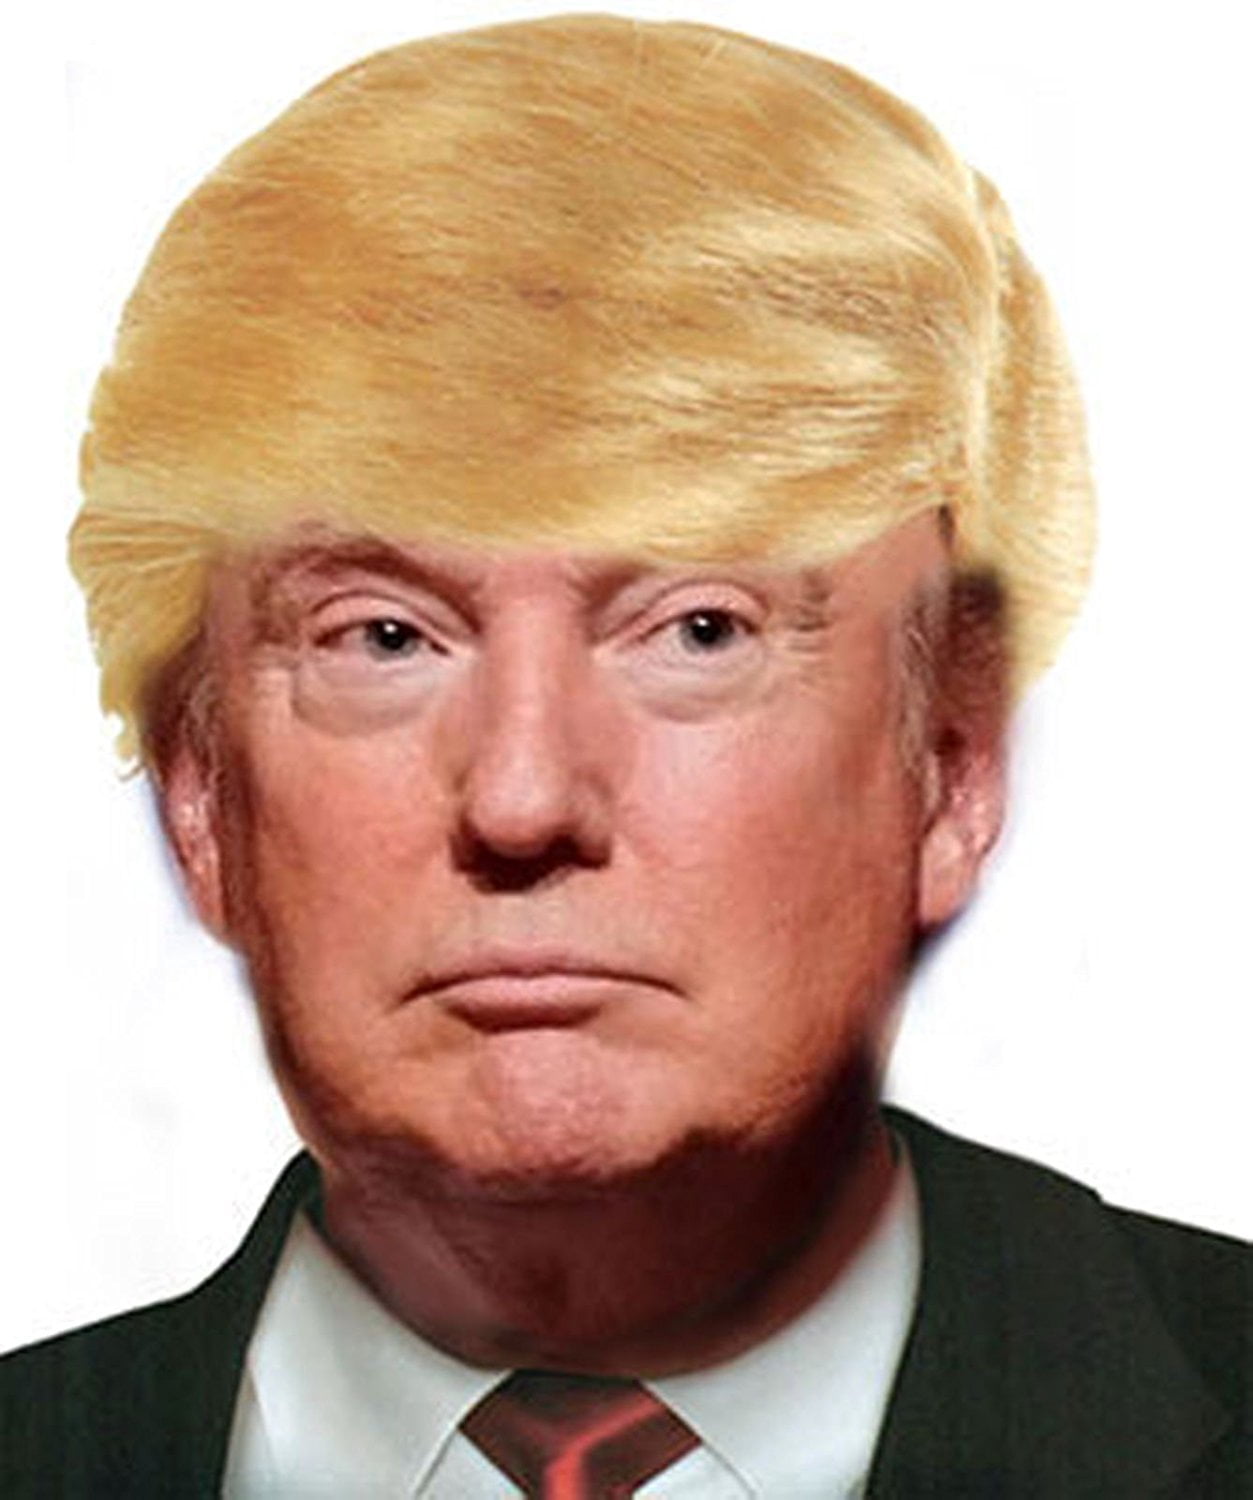 Combover Leader Herren Erwachsene President Trump Blond Kostüm Perücke